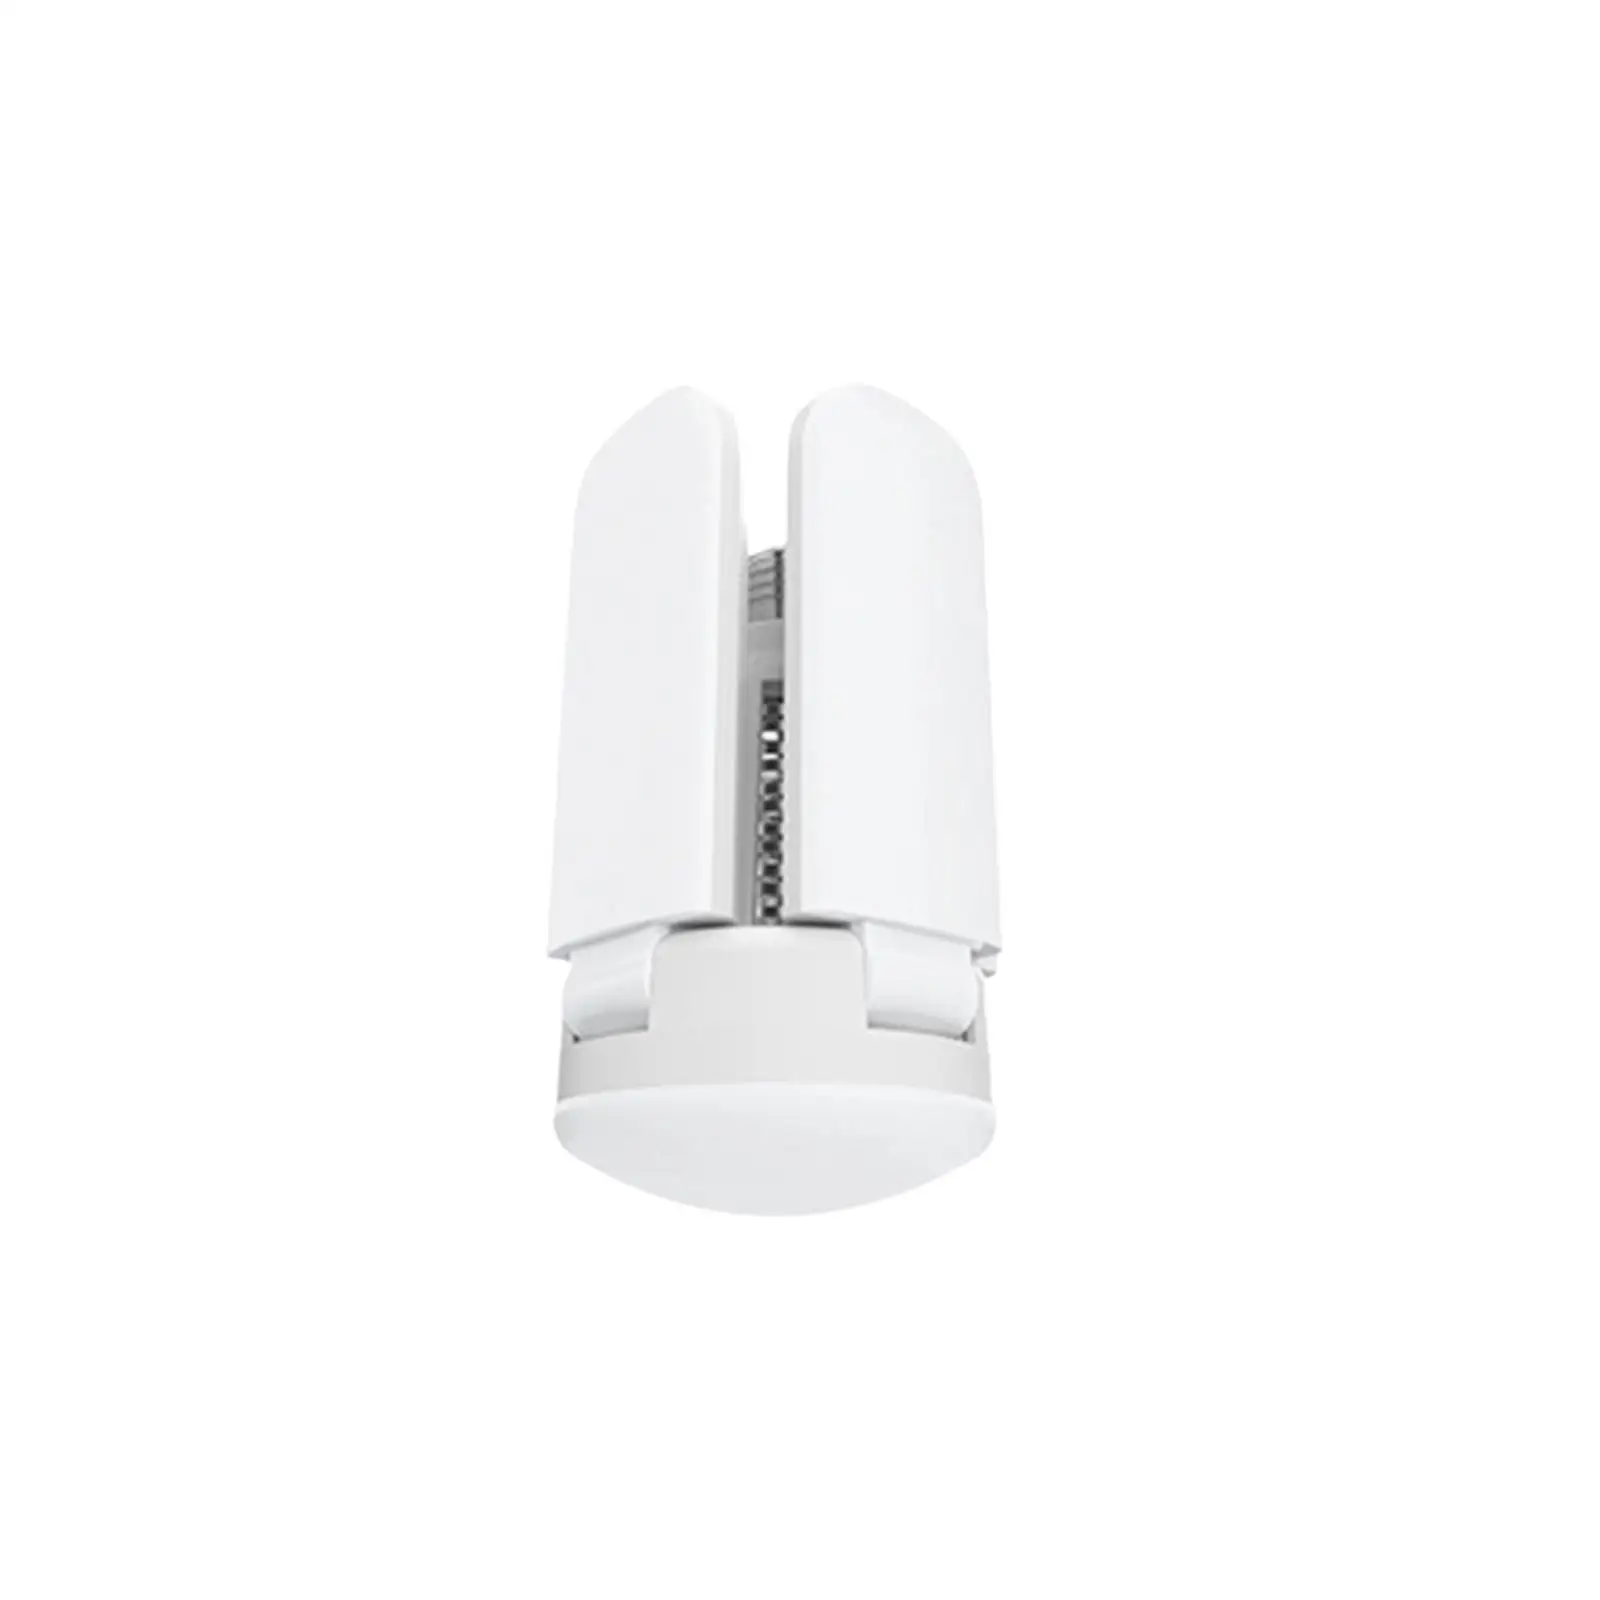 LED Mosquito Light Bulb Folding E27 Base Convenient Assemble Illumination Accessories White for Workbench Porch Basement